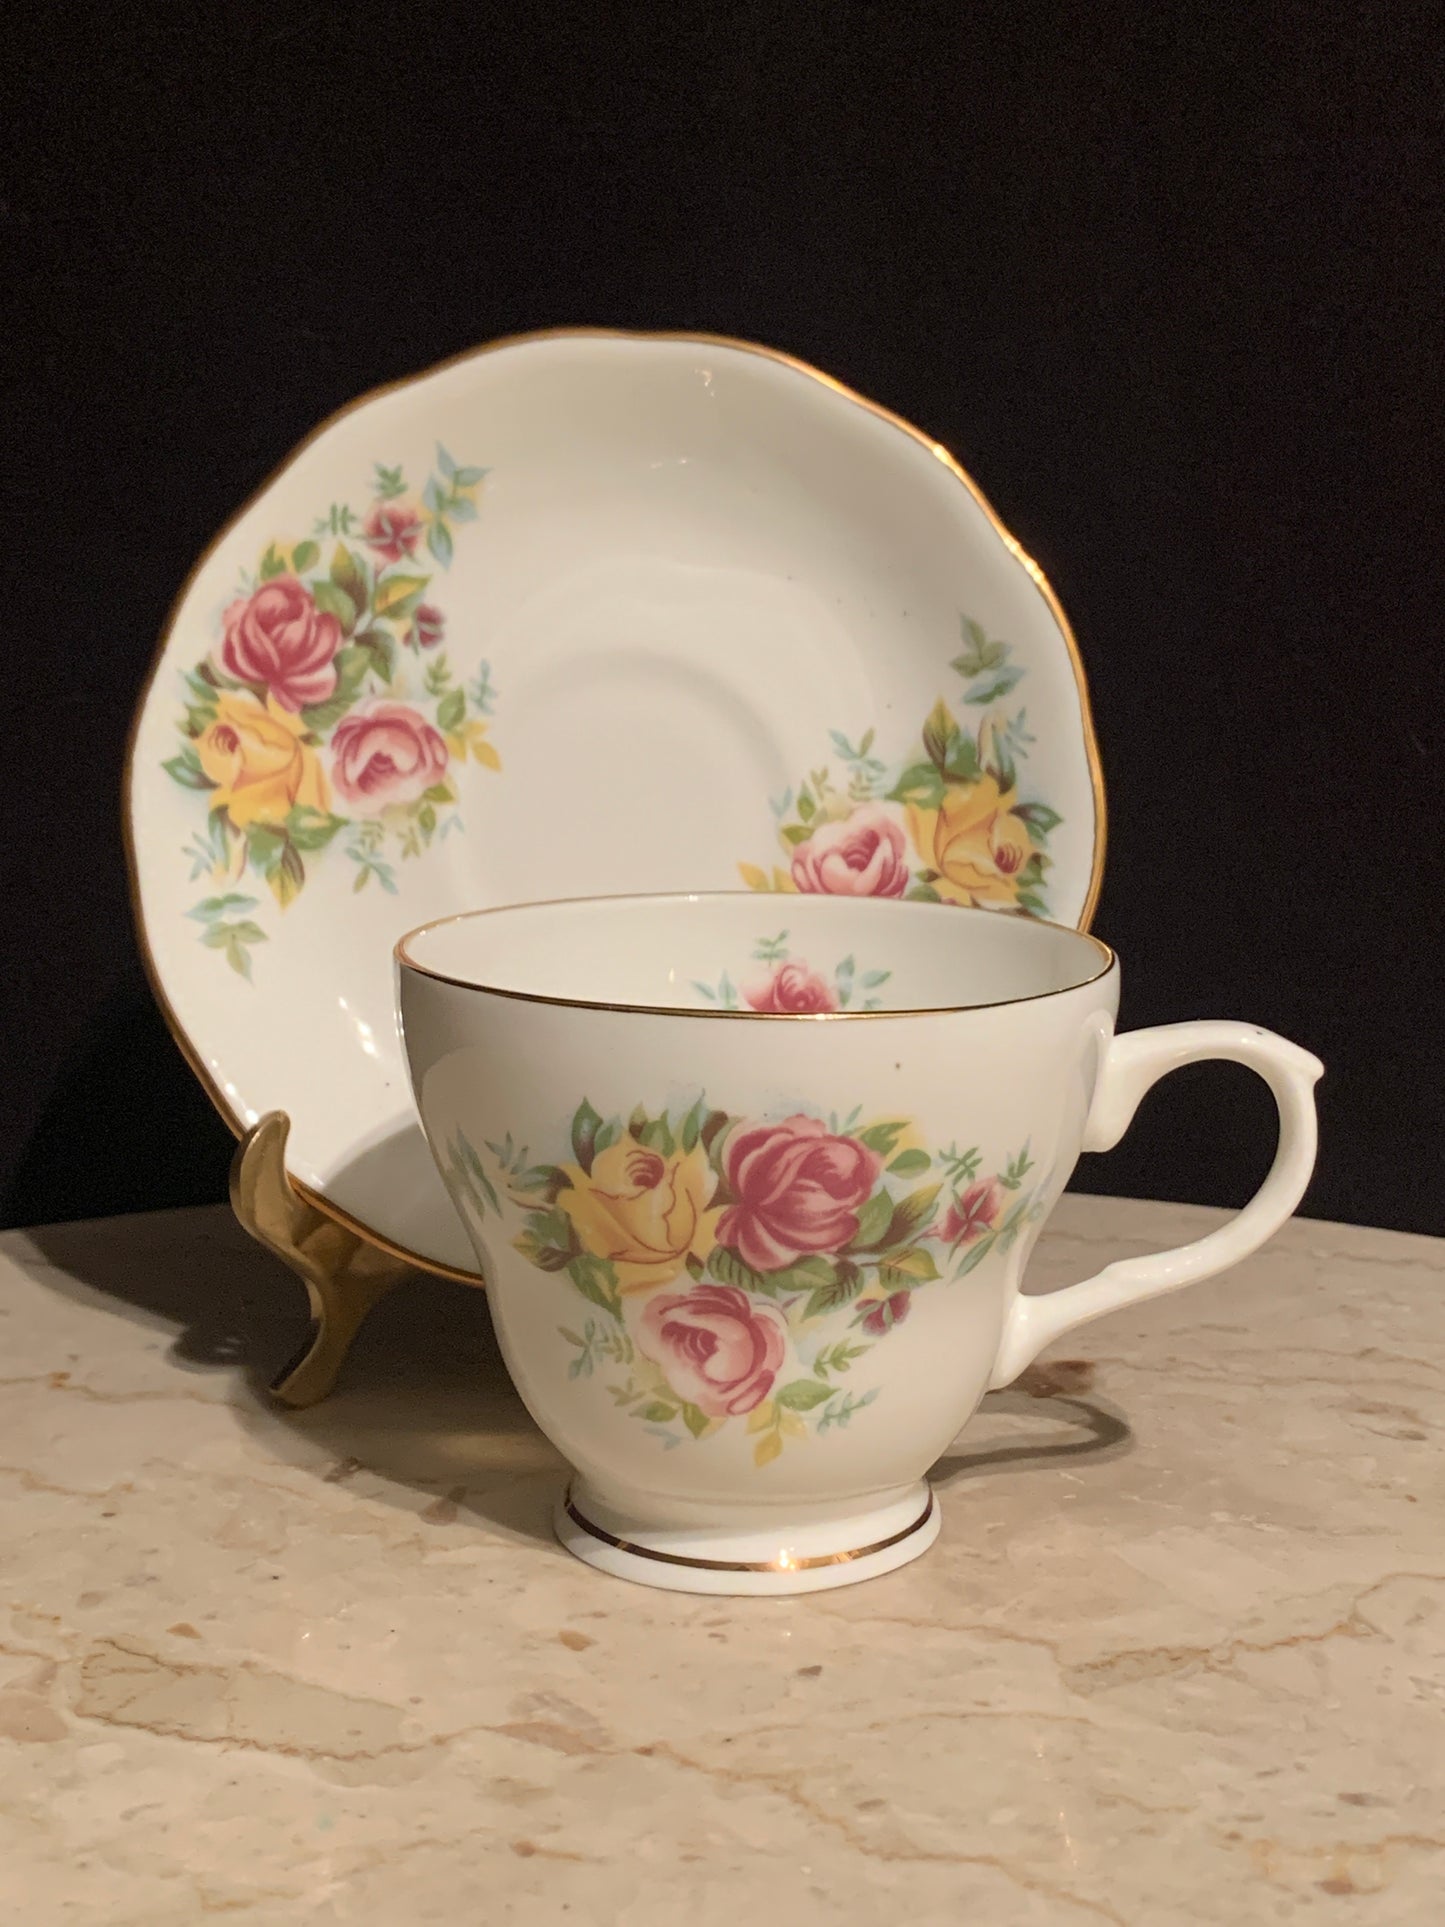 Vintage Teacup Made in India Vintage Tea Cup with Floral Pattern